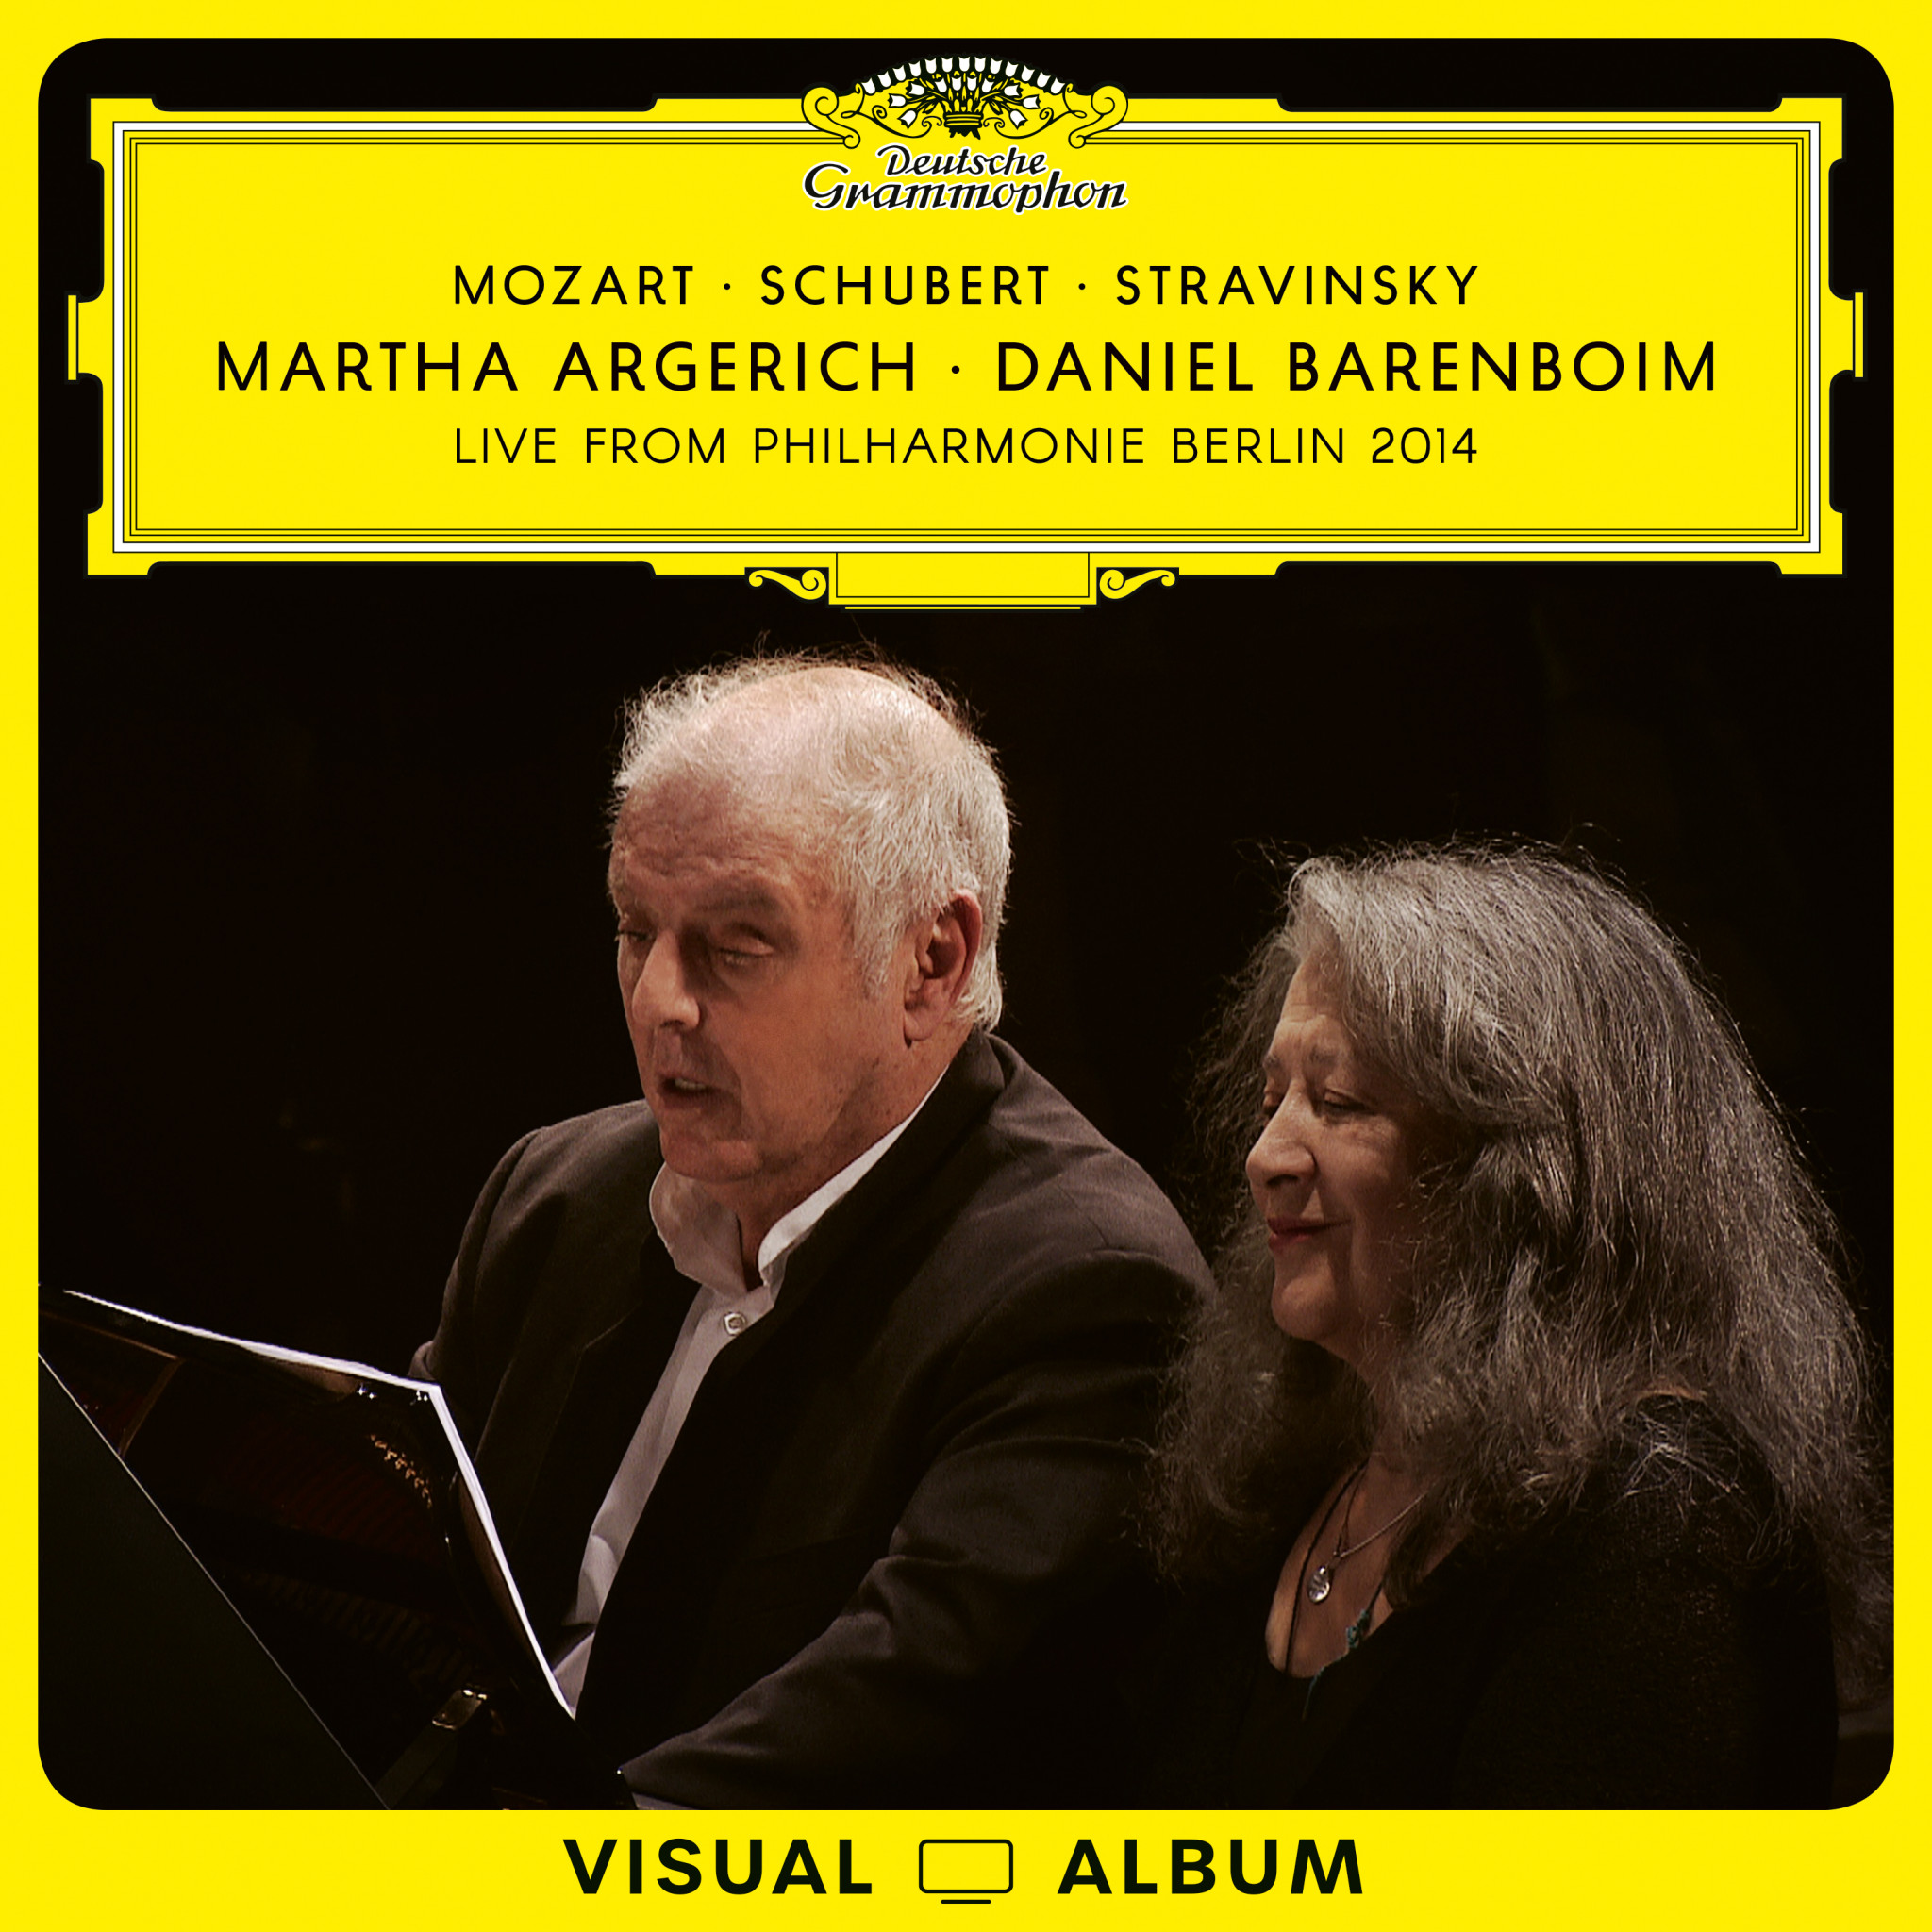 Martha Argerich and Daniel Barenboim - Mozart, Schubert, Stravinsky - Euroarts Visual Album Cover